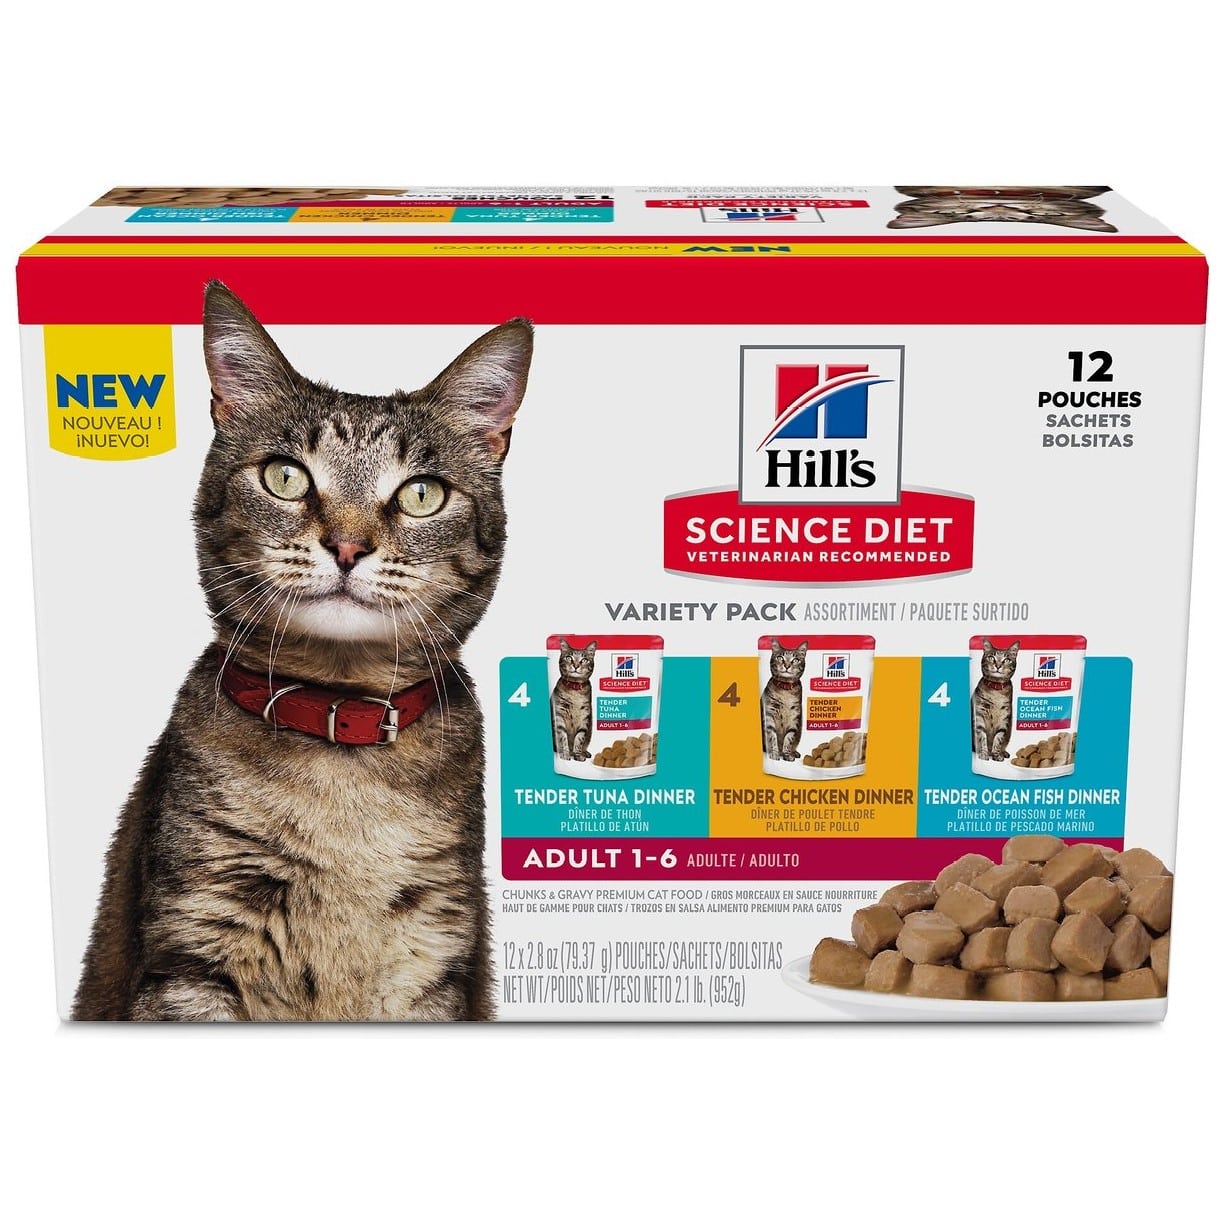 Hill's Science Diet Tender Dinner Variety Pack, Adult Cat Food